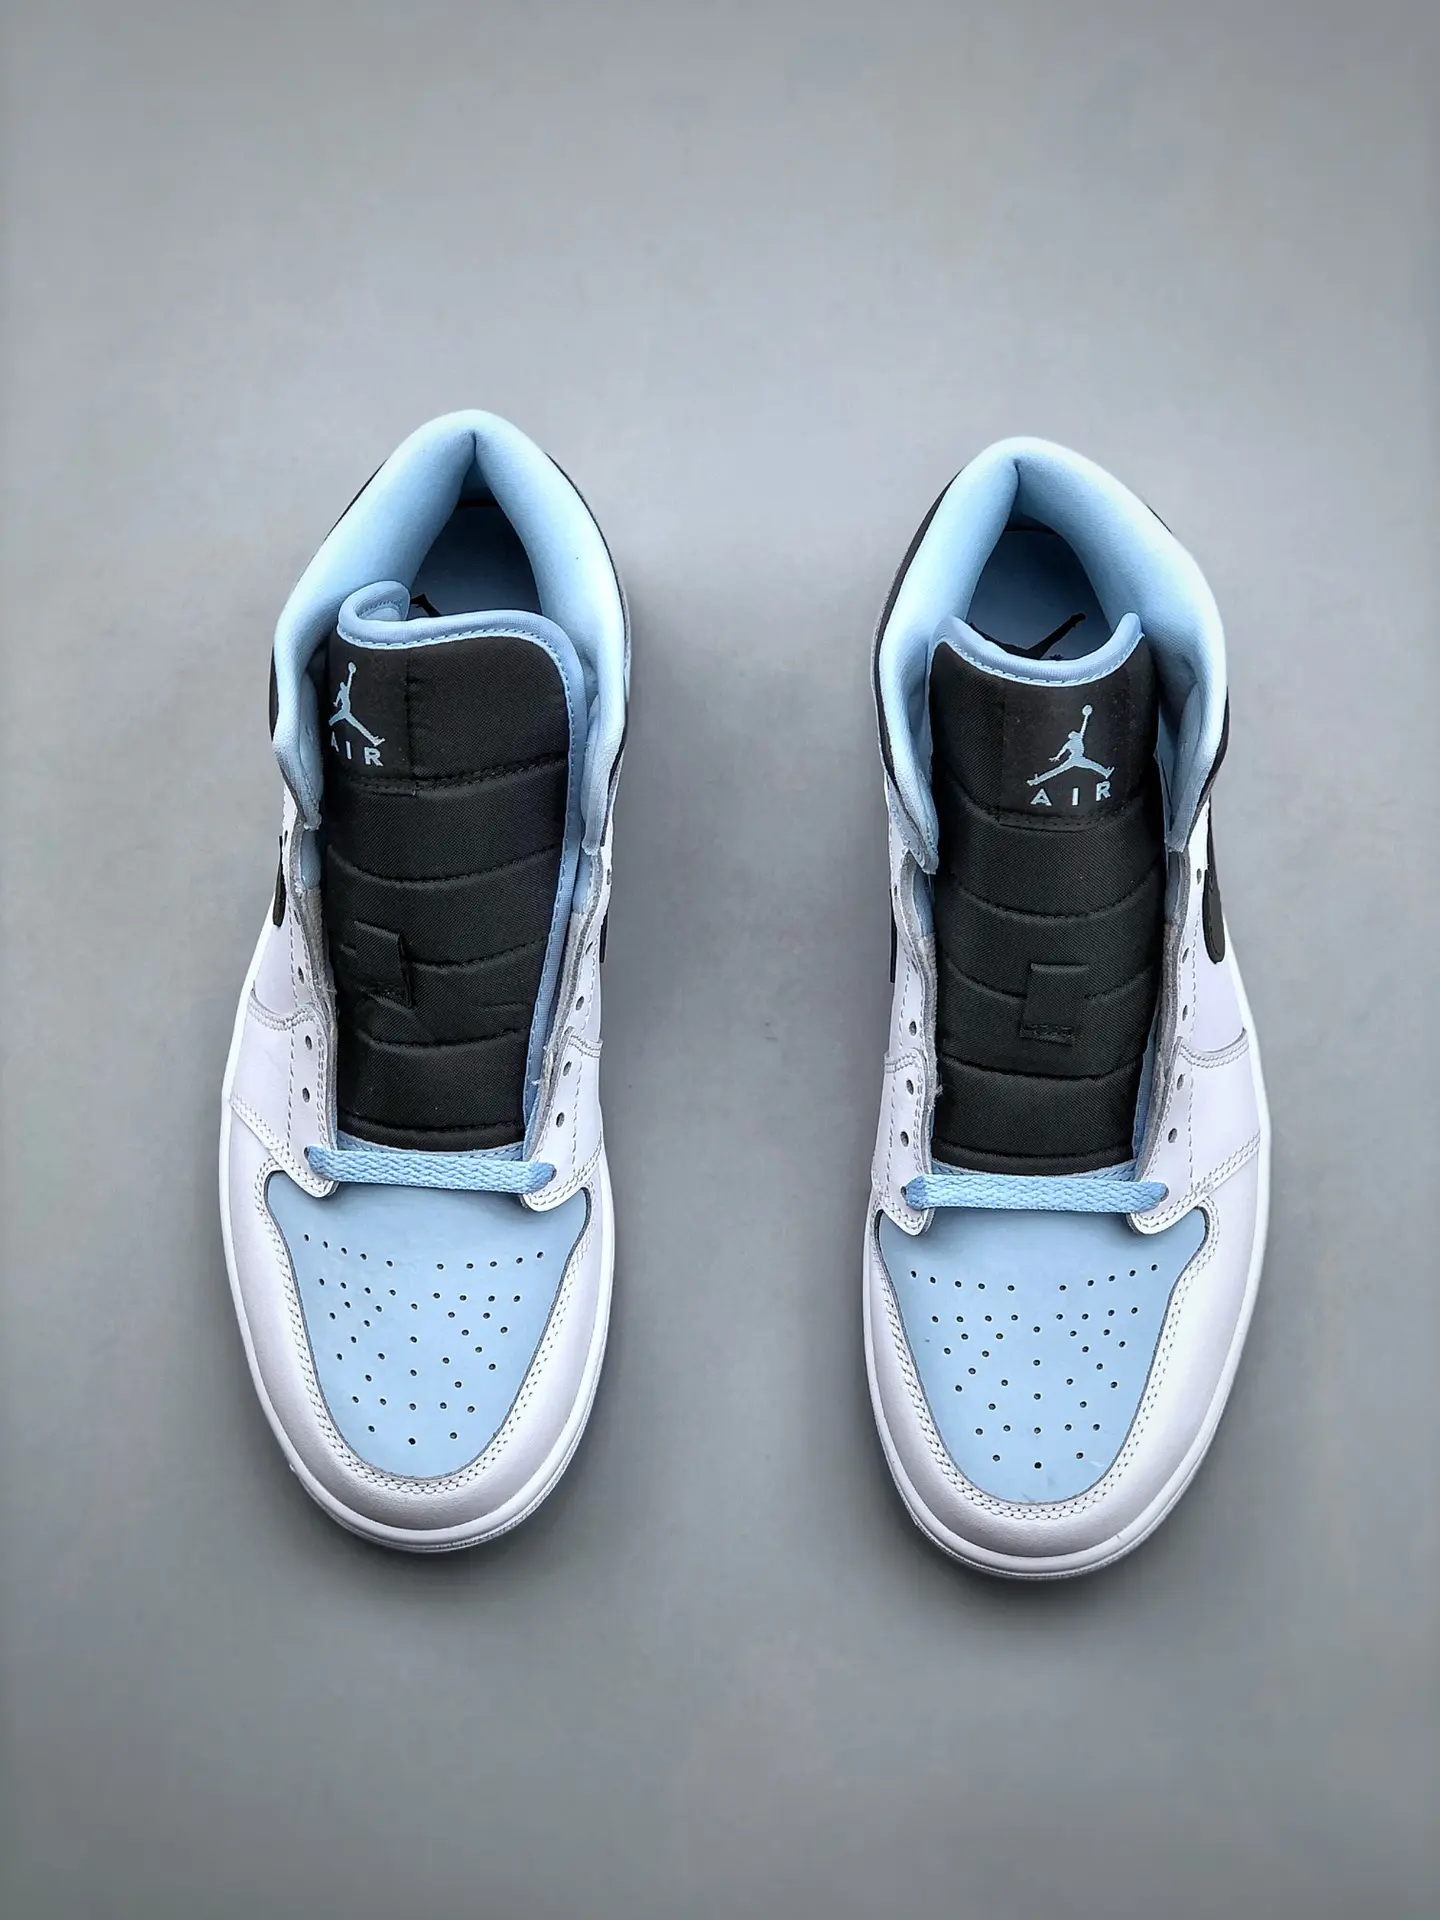 Air Jordan 1 Mid SE White Ice Blue Shoes Review | YtaYta